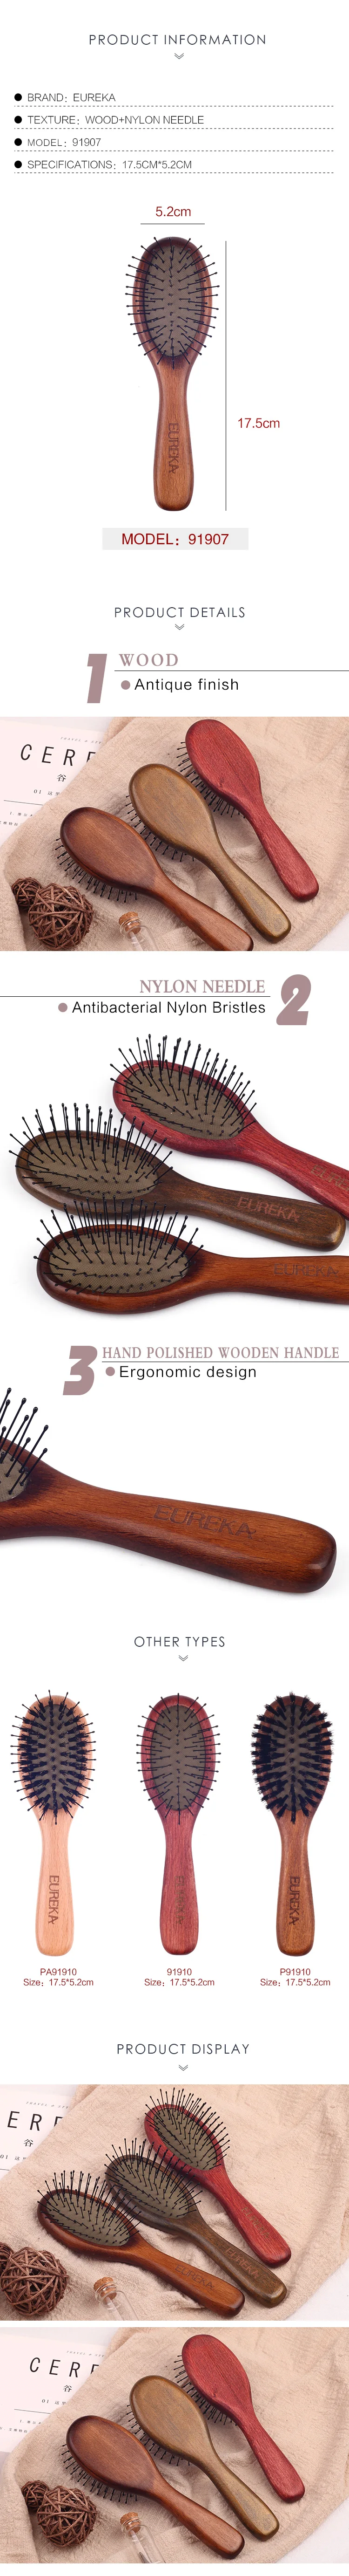 EUREKA 91910 Engraved Wooden Nylon Pins Hair Brush Wood Hair Brush Massage Classical Style Hair Brush